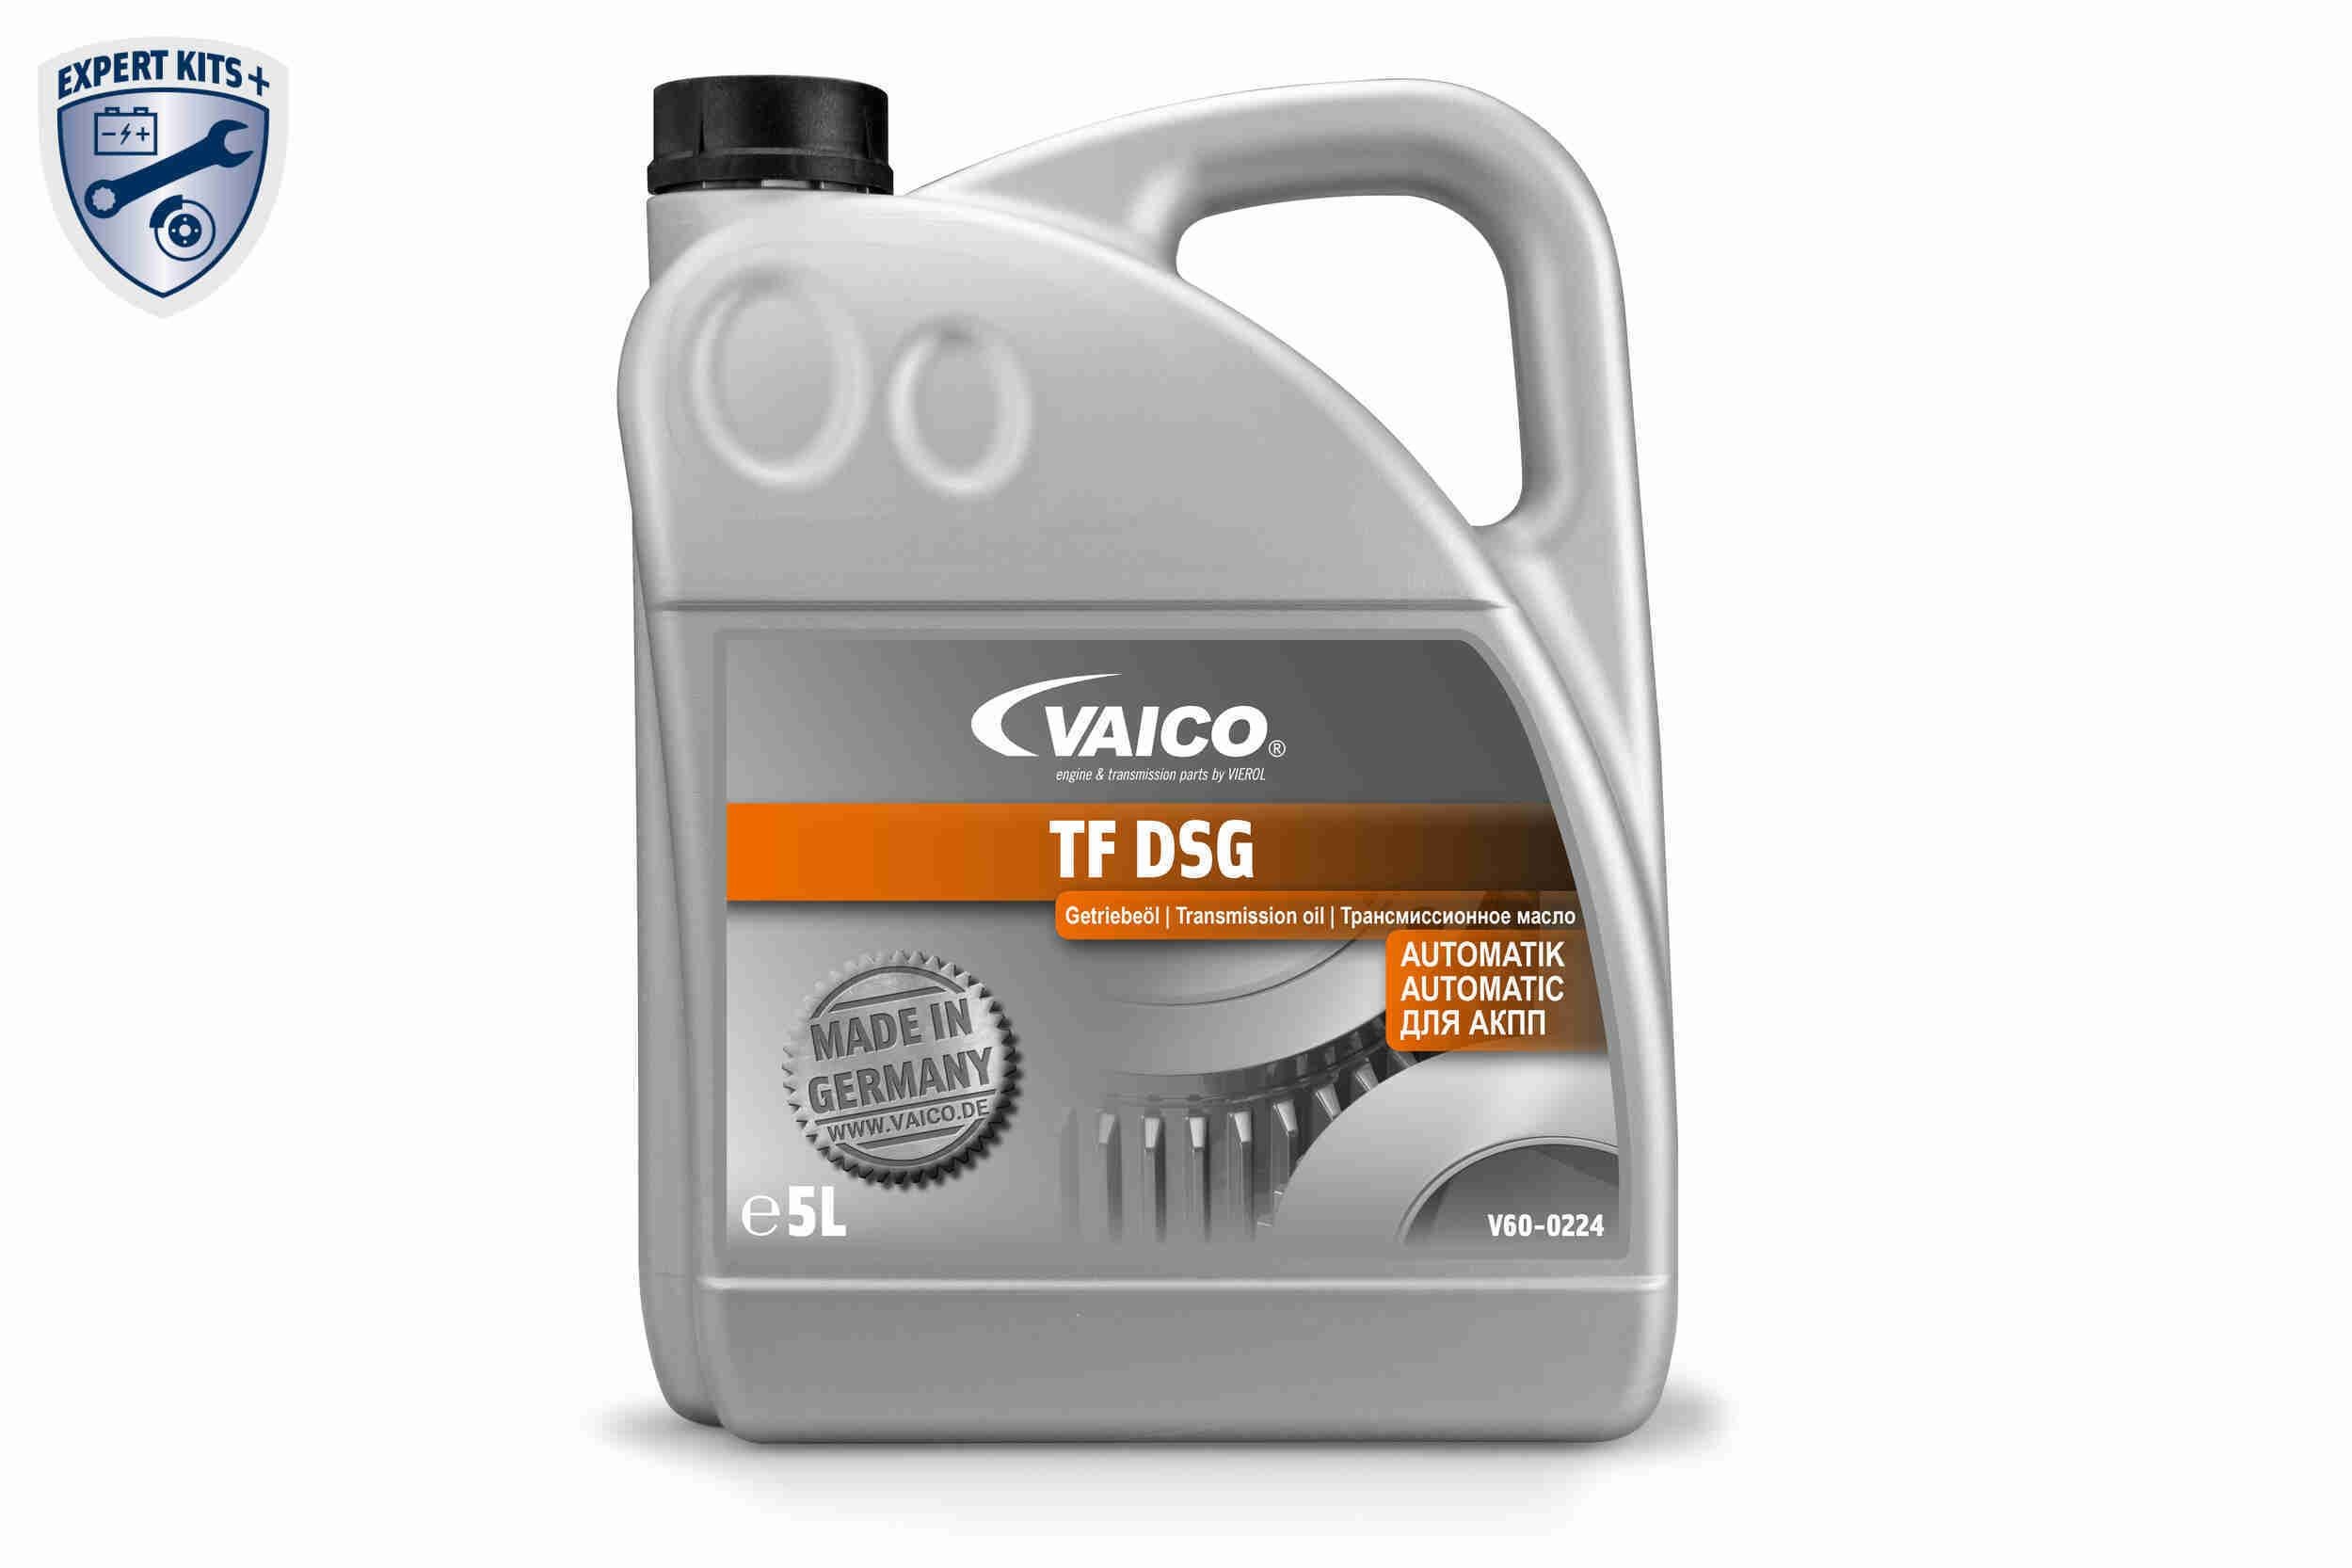 VAICO V60-0224 Audi A3 2013 Manual transmission oil